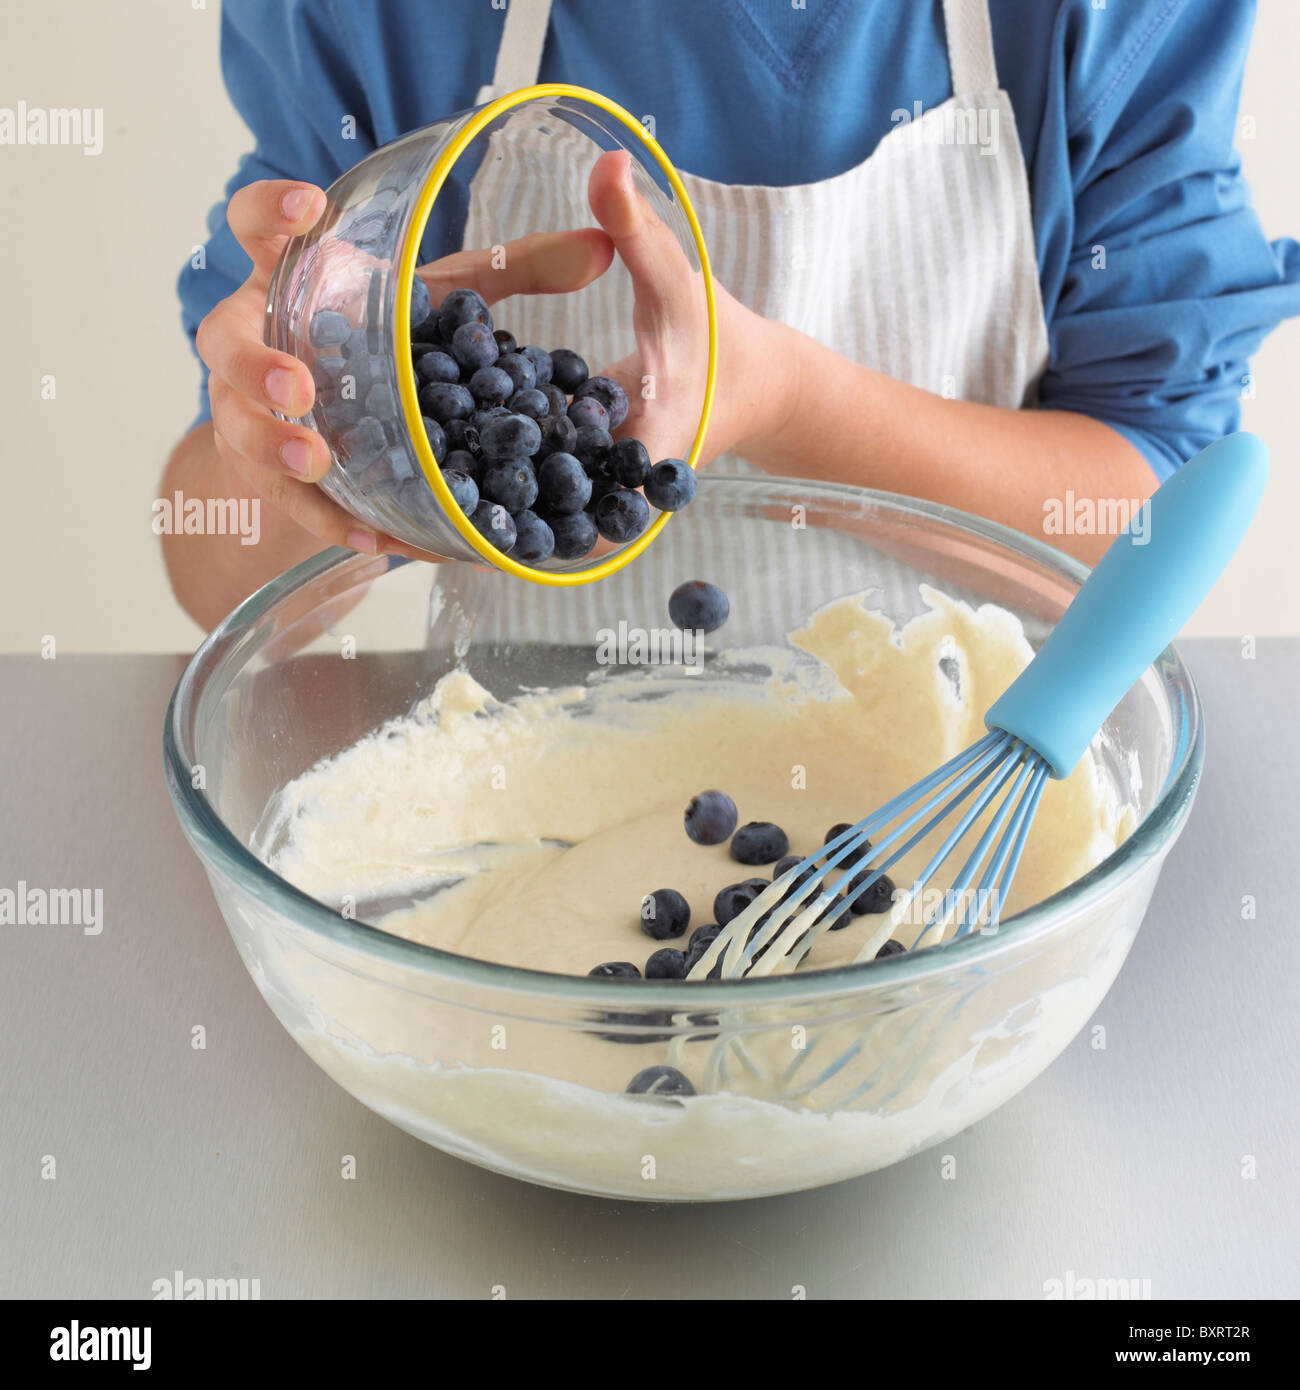 Boy's hands adding blueberries to pancake batter Stock Photo